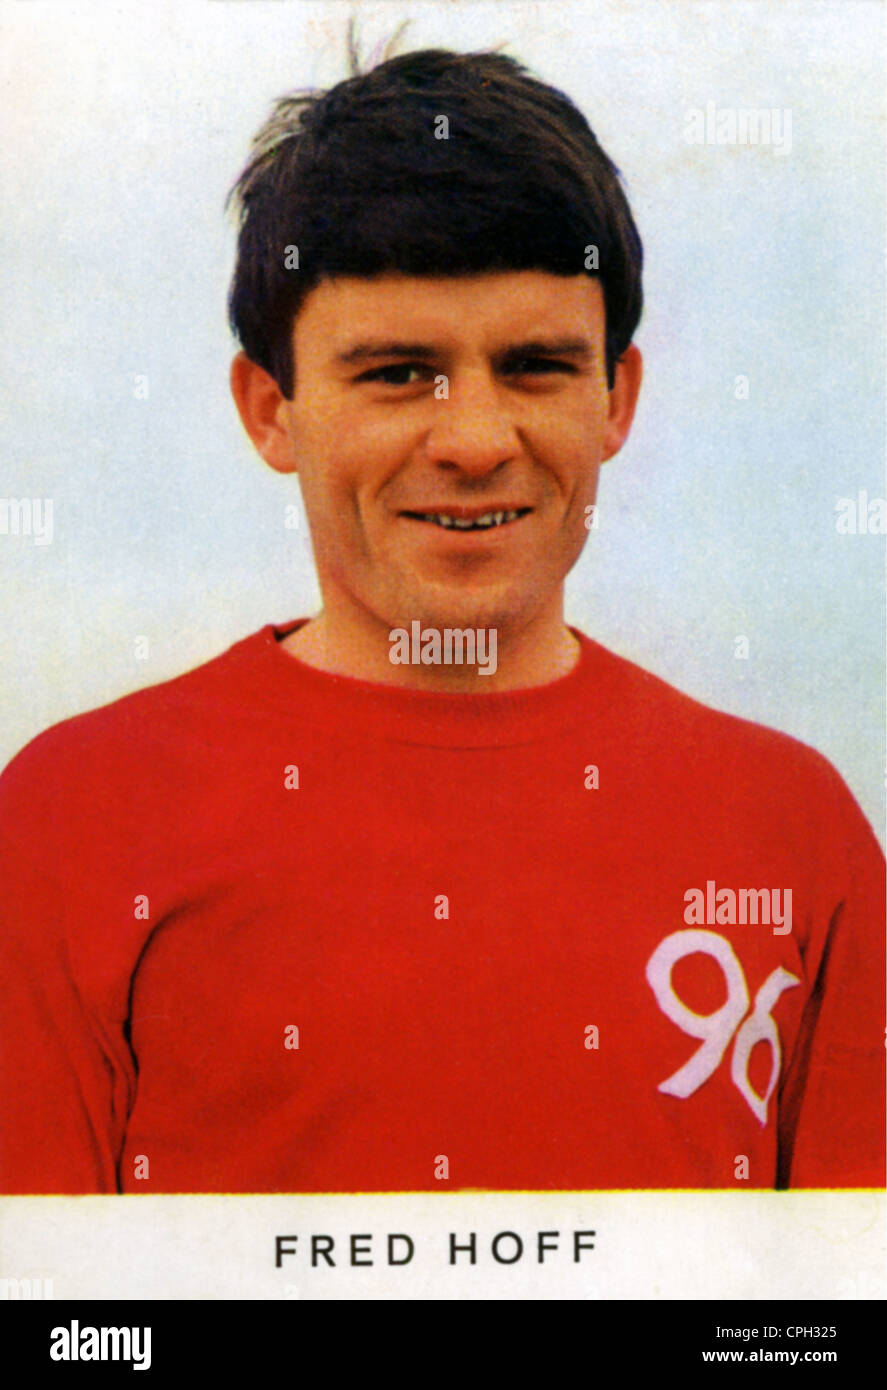 Hoff, Fred, * 25.1.1942, German footballer, player for Hanover 96, half length, trading card, 1960s, Stock Photo